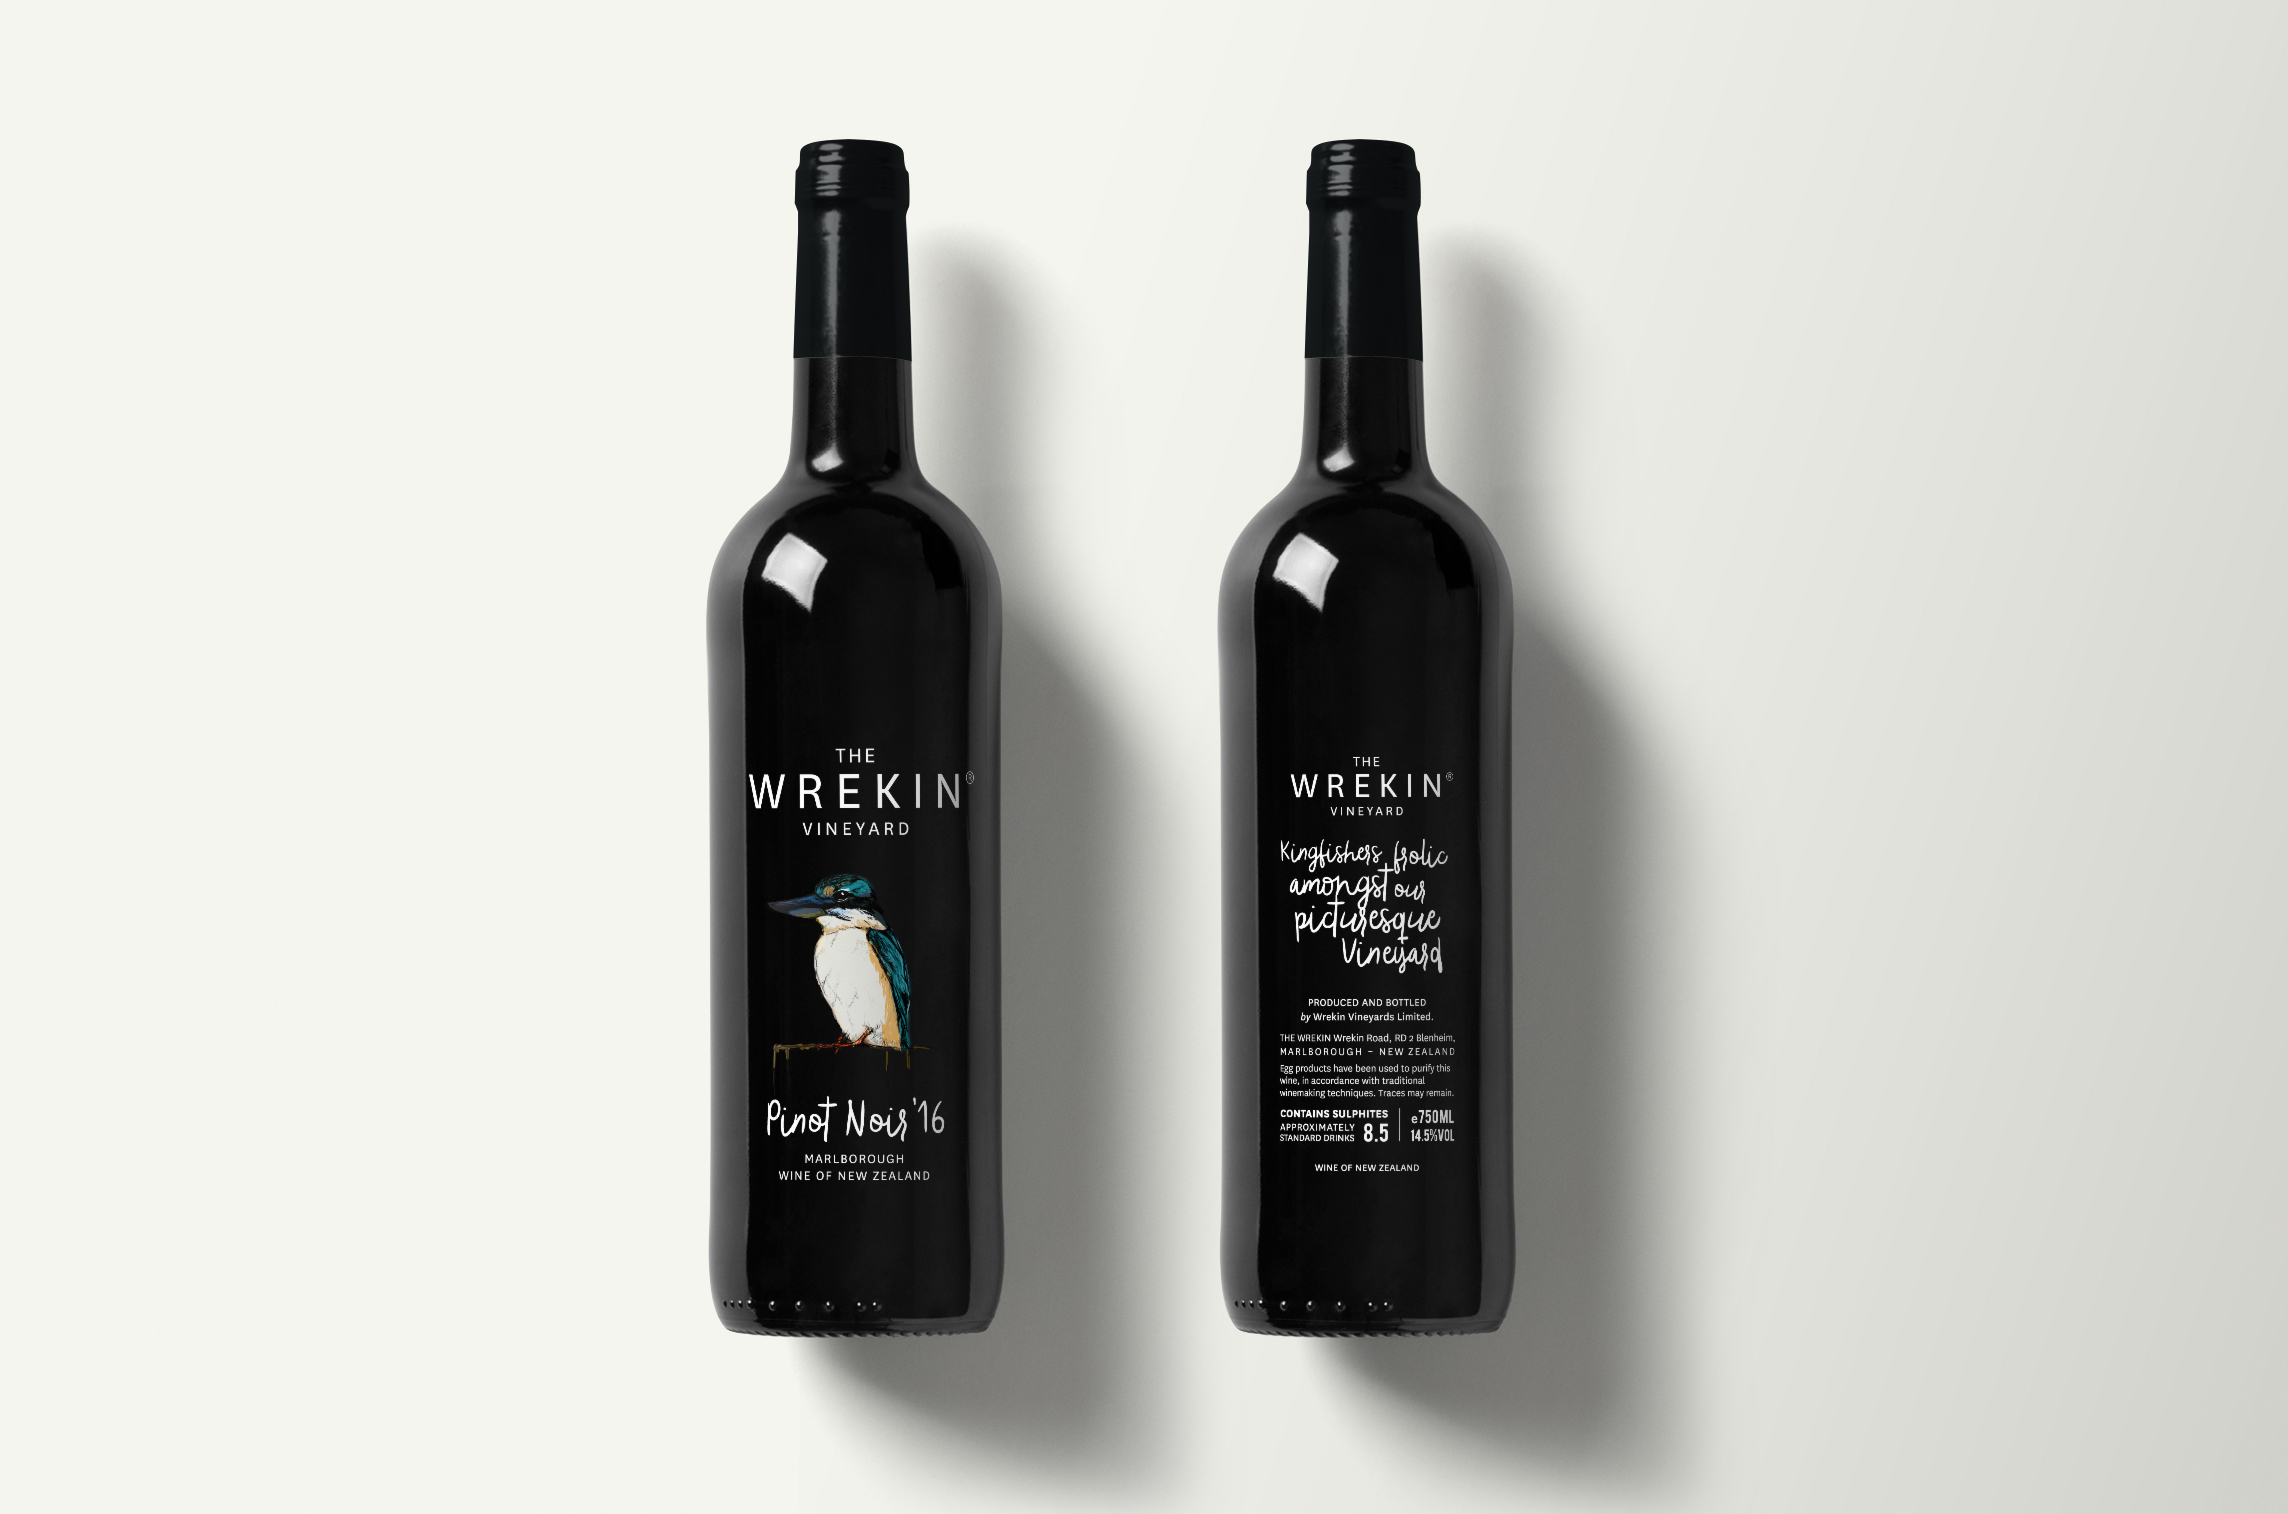 The Wrekin Vineyard